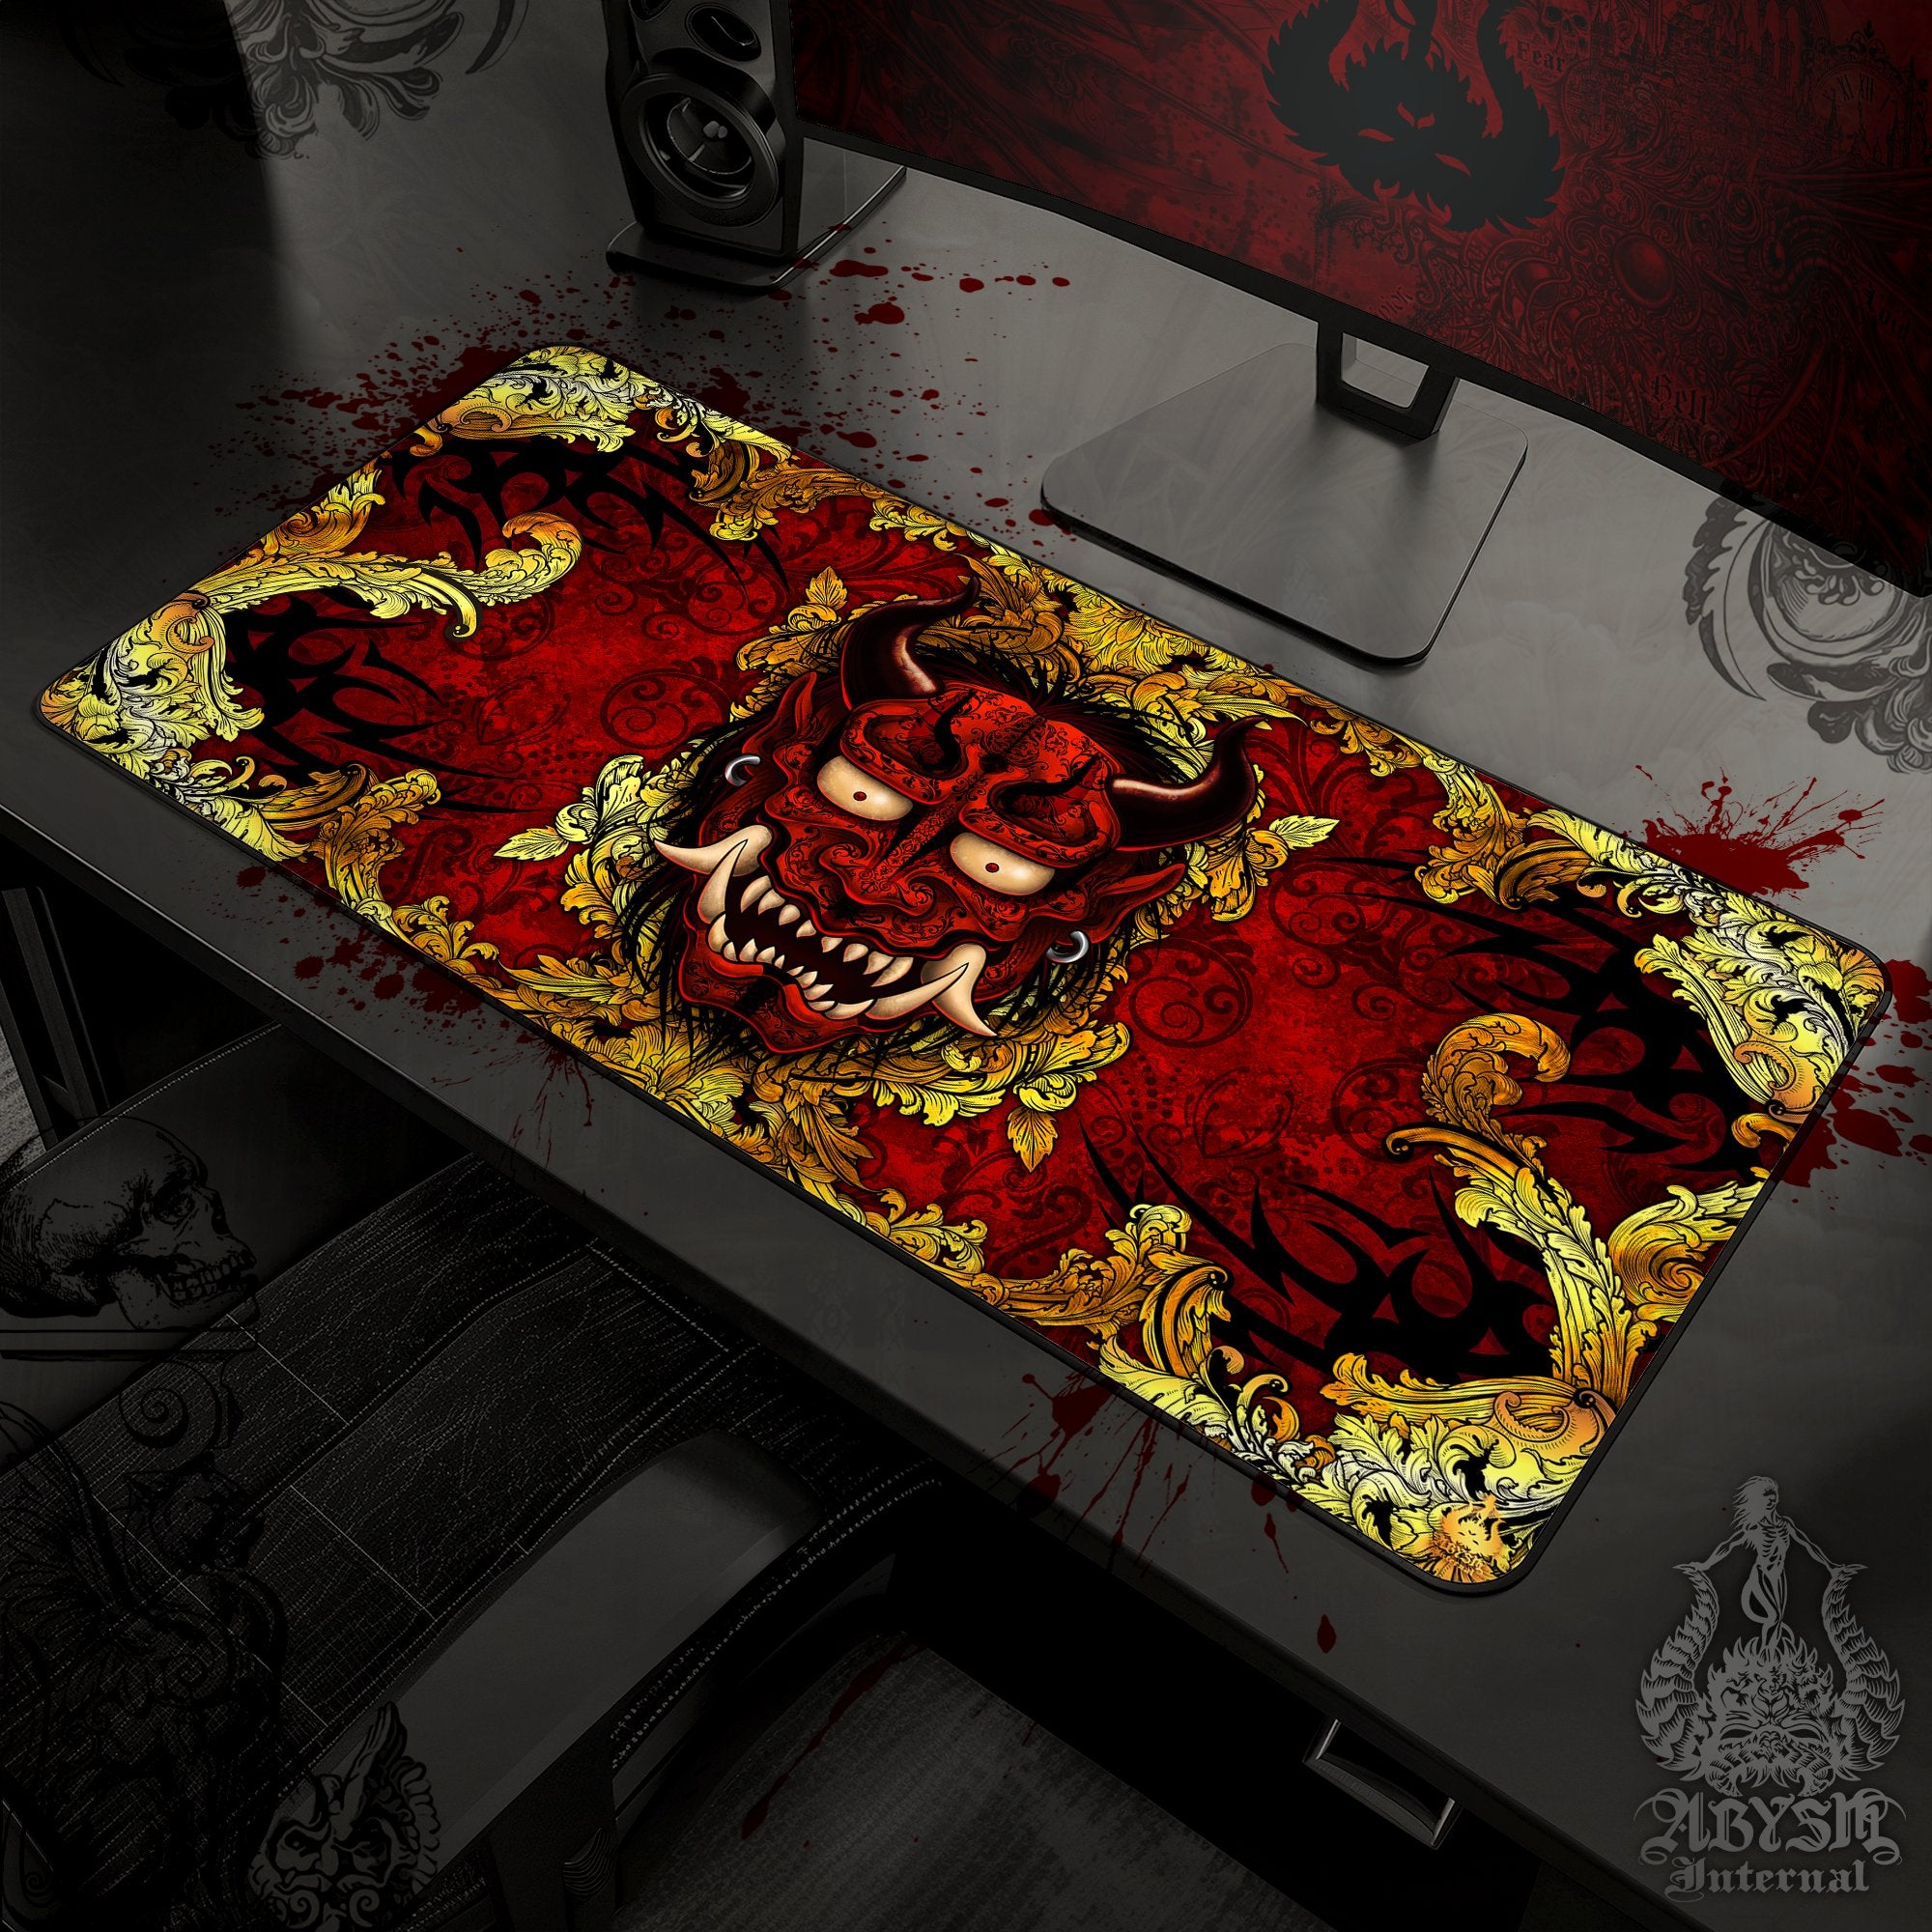 Japanese Demon Desk Mat, Gold Oni Gaming Mouse Pad, Gamer Table Protector Cover, Fantasy Workpad, Manga Yokai Art Print - 2 Colors - Abysm Internal